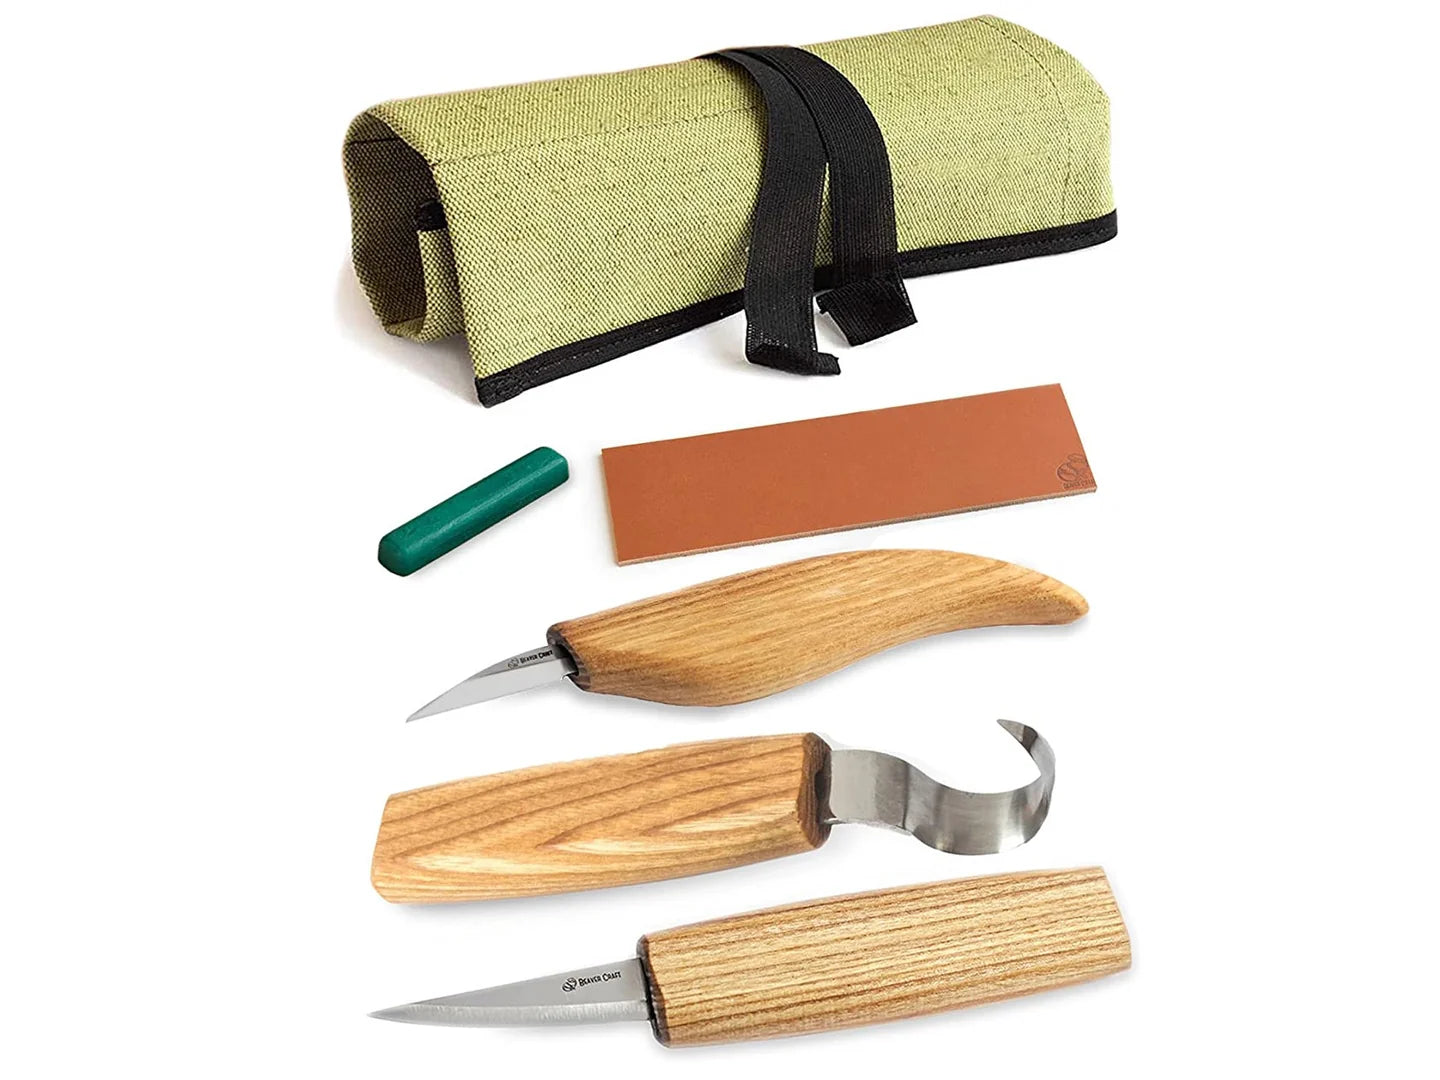 Whittle knife kit tools & whittle spoon set Left handed BeaverCraft –  BeaverCraft Tools